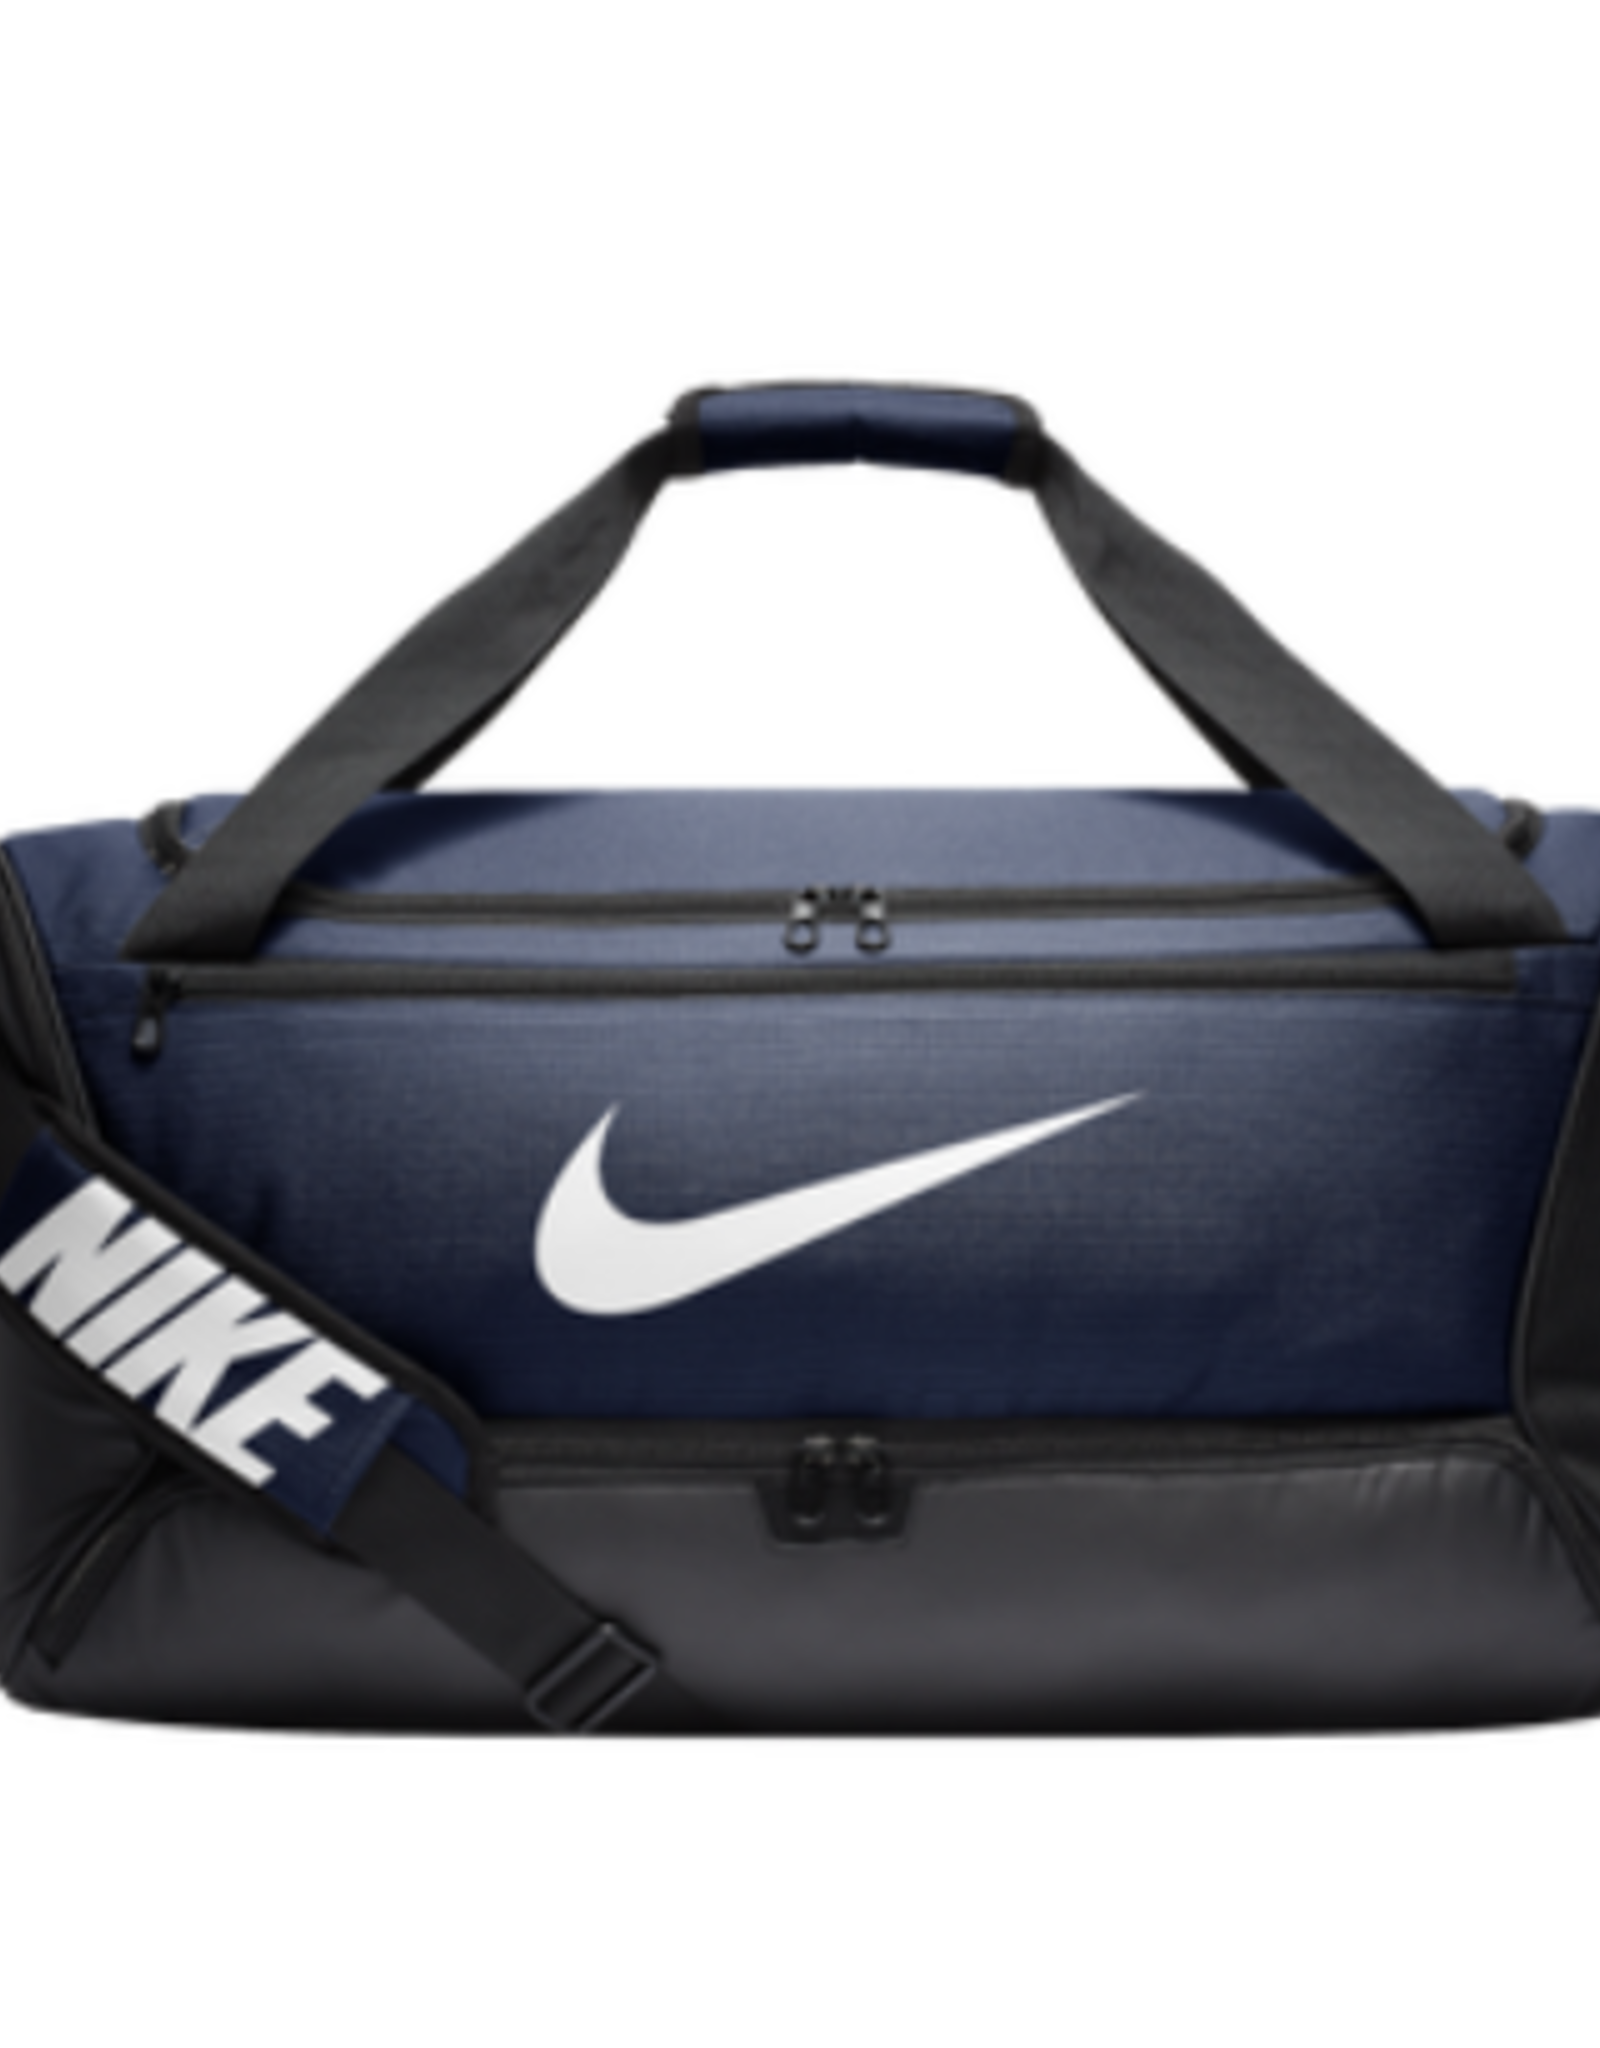 NON-UNIFORM Nike Brasilia Duffle Bag, large